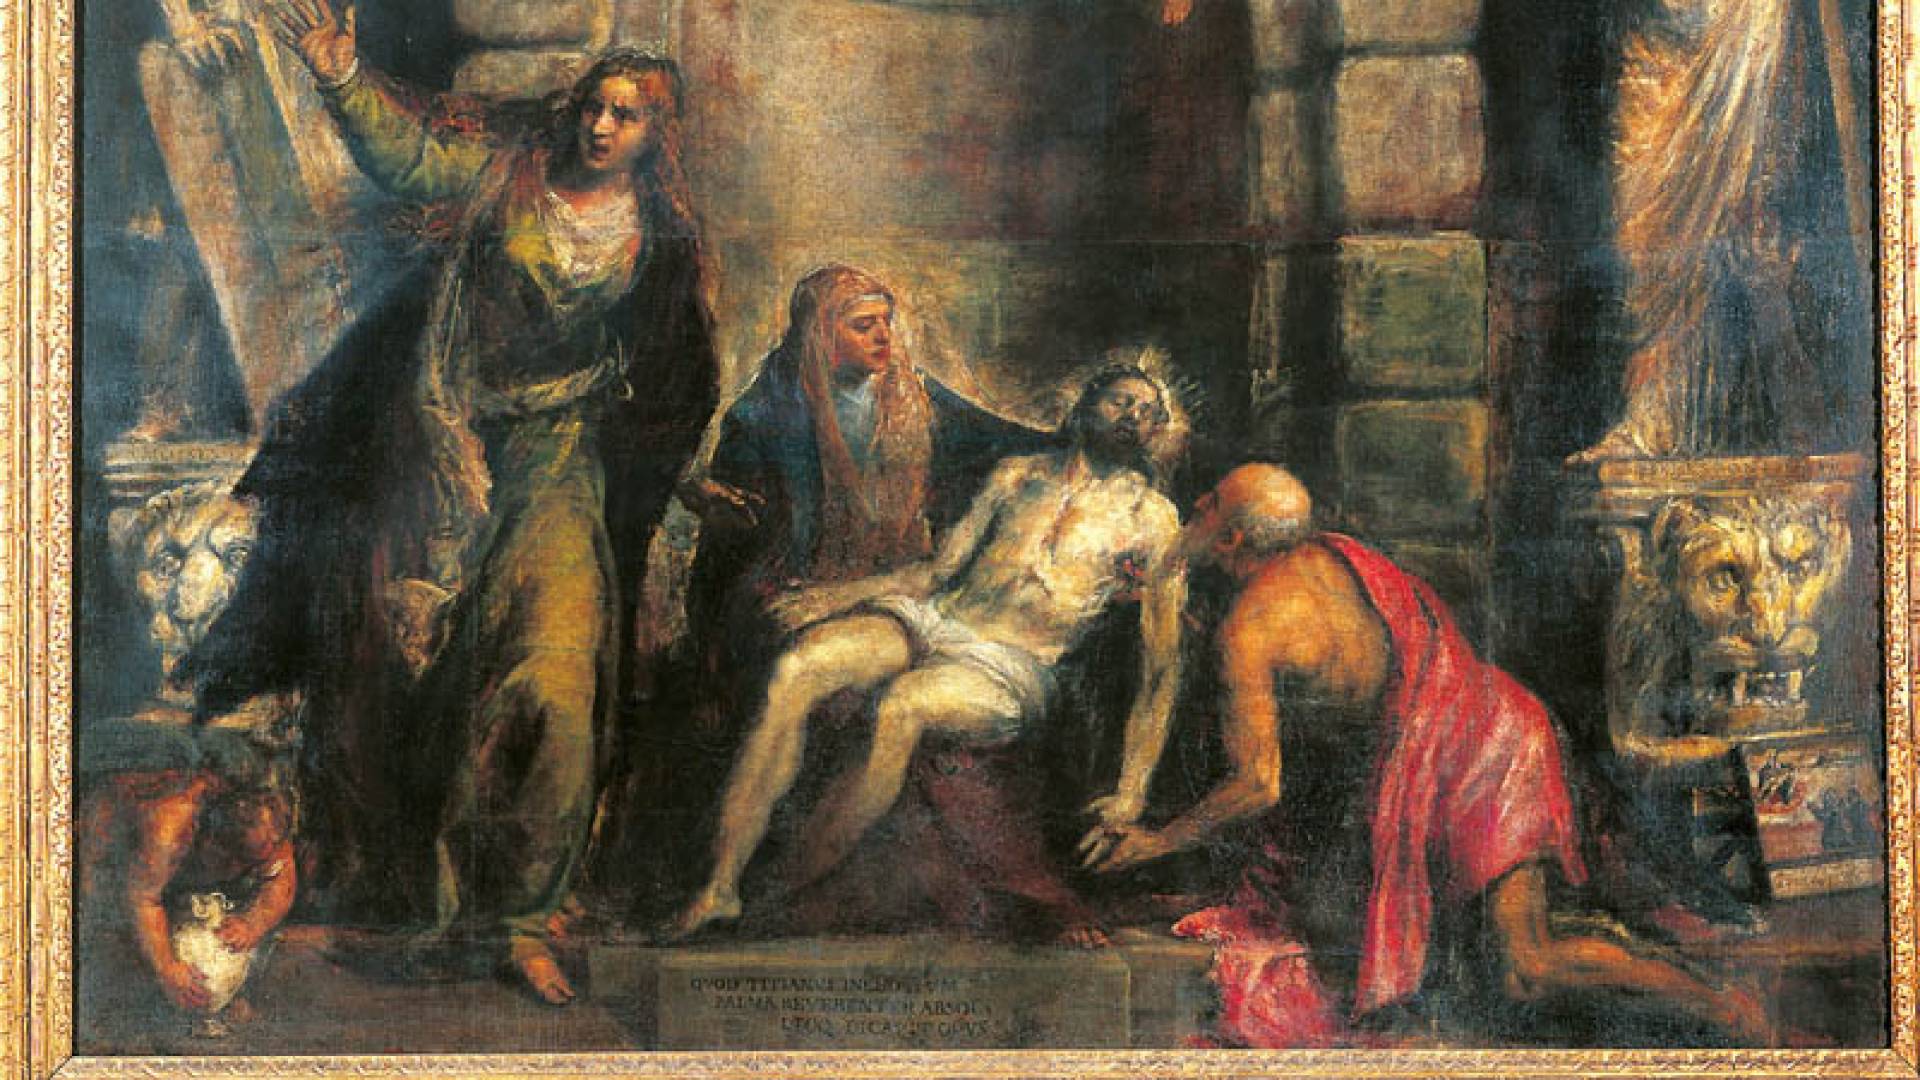 ACCADEMIA GALLERY, Pieta' - Titian